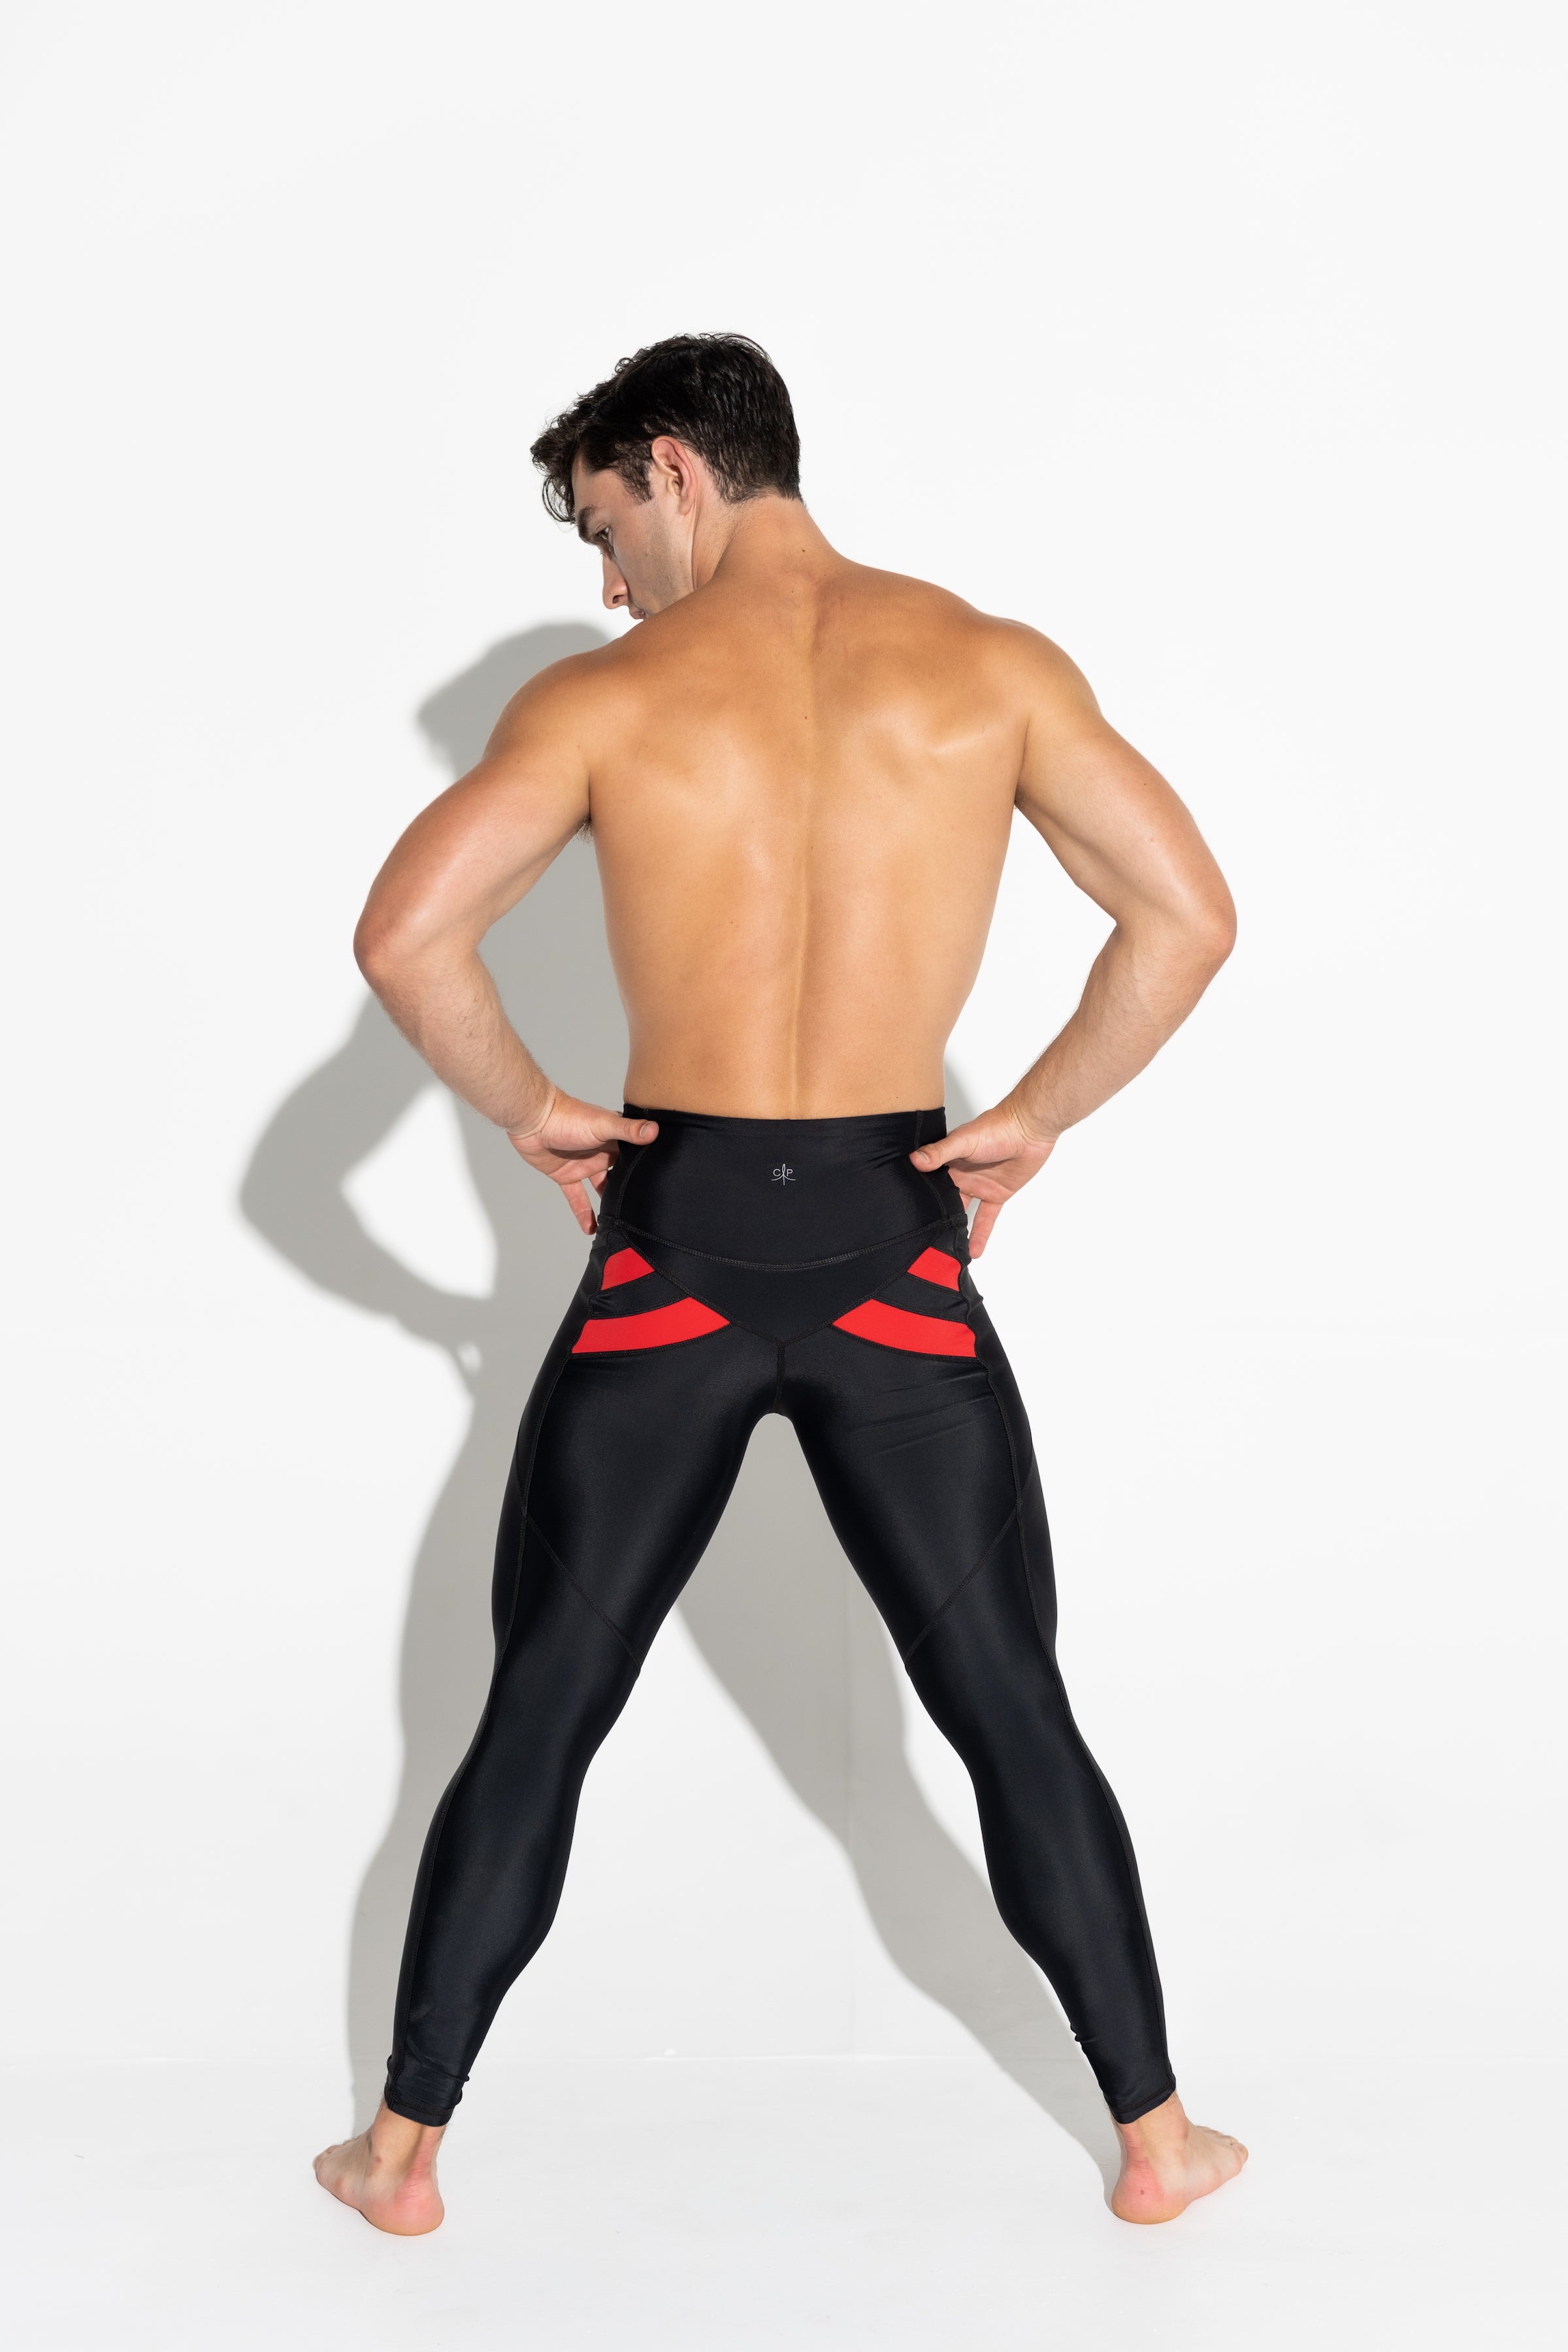 No Peek Leggings from Cheek Peek.  Male, back view. Black with red.